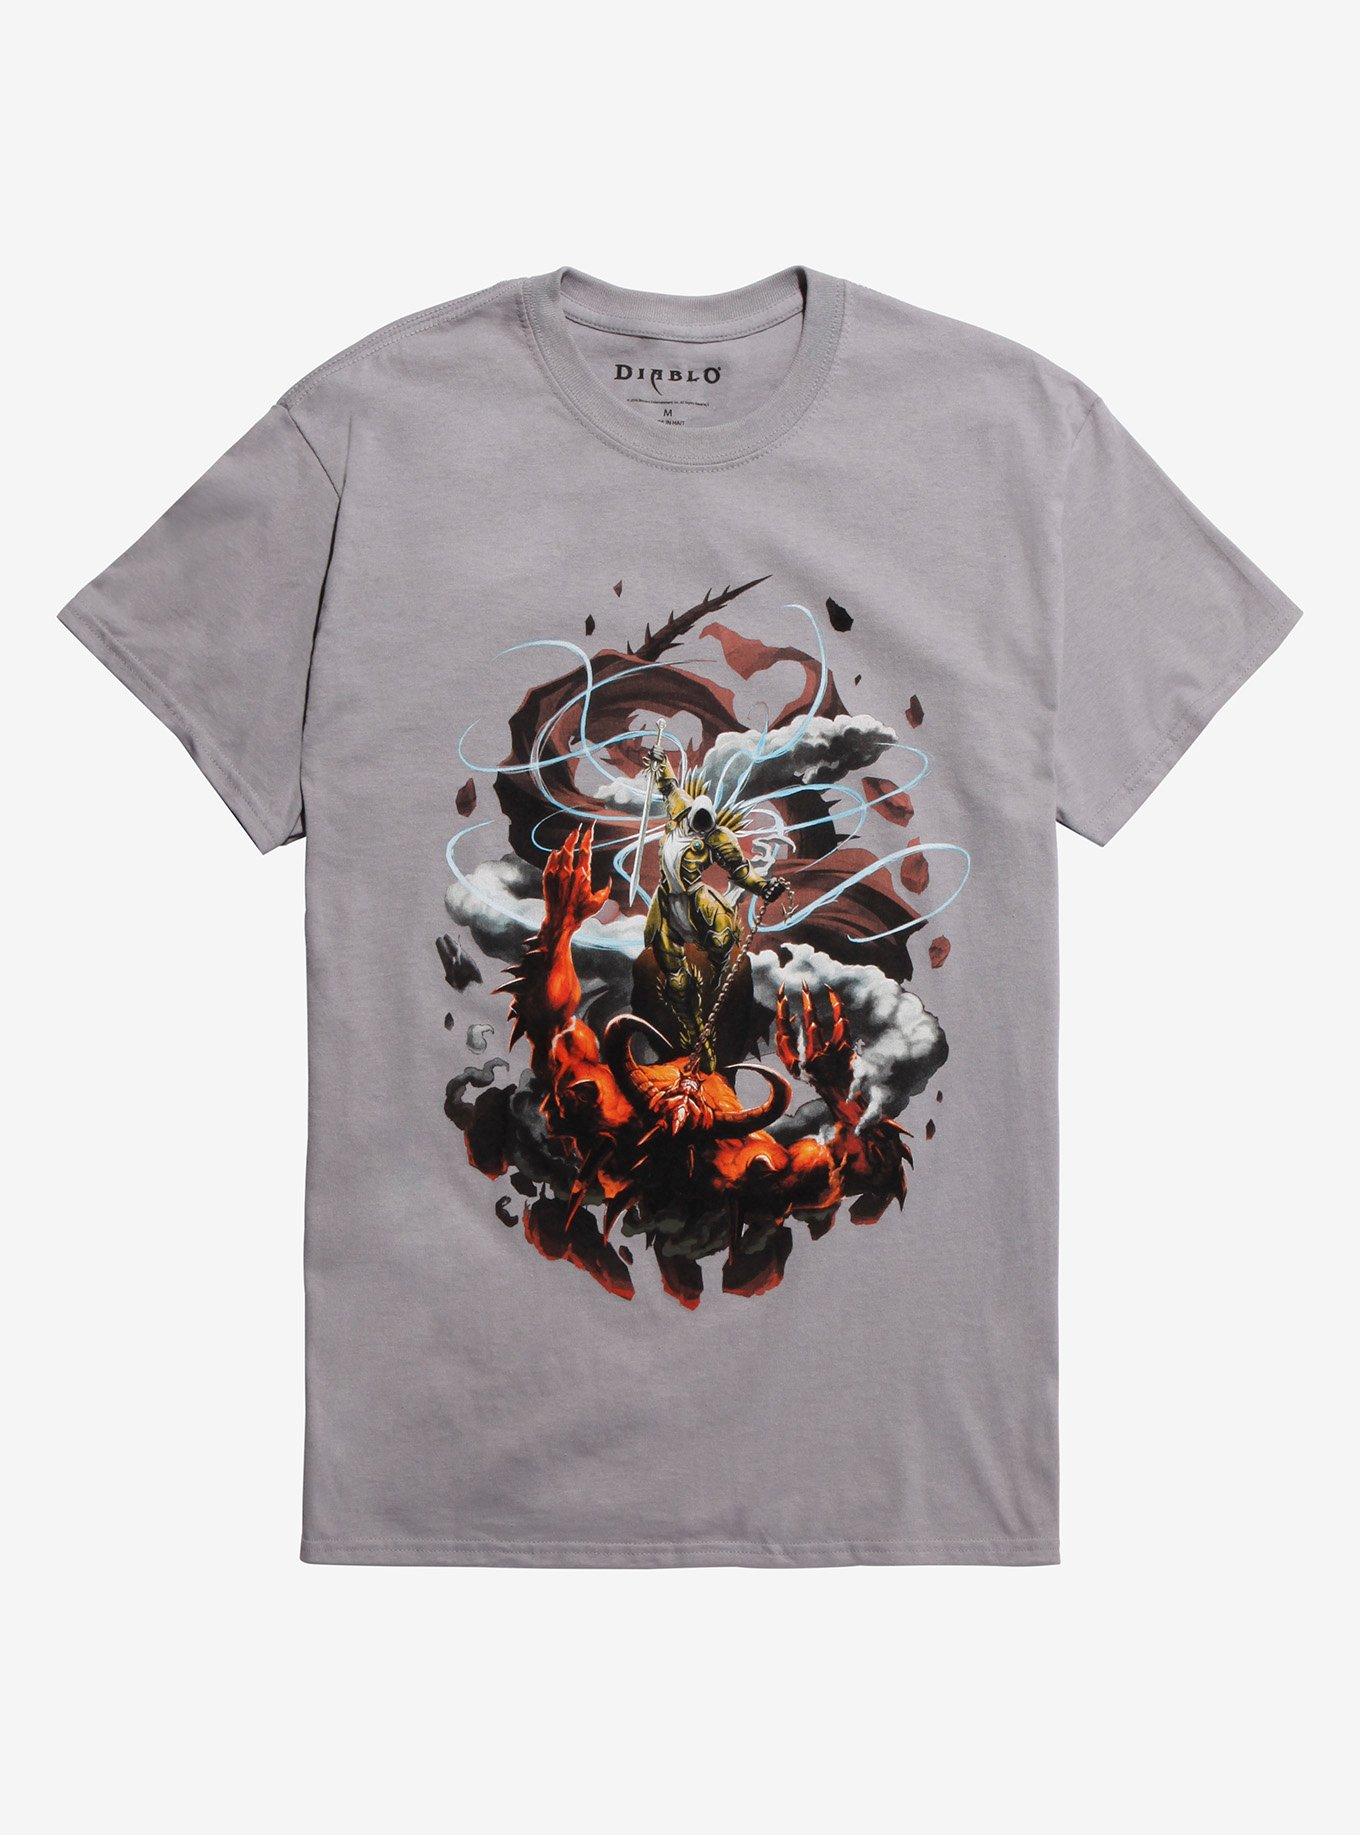 Blizzard Diablo Angiris Dominicus T-Shirt, GREY, hi-res